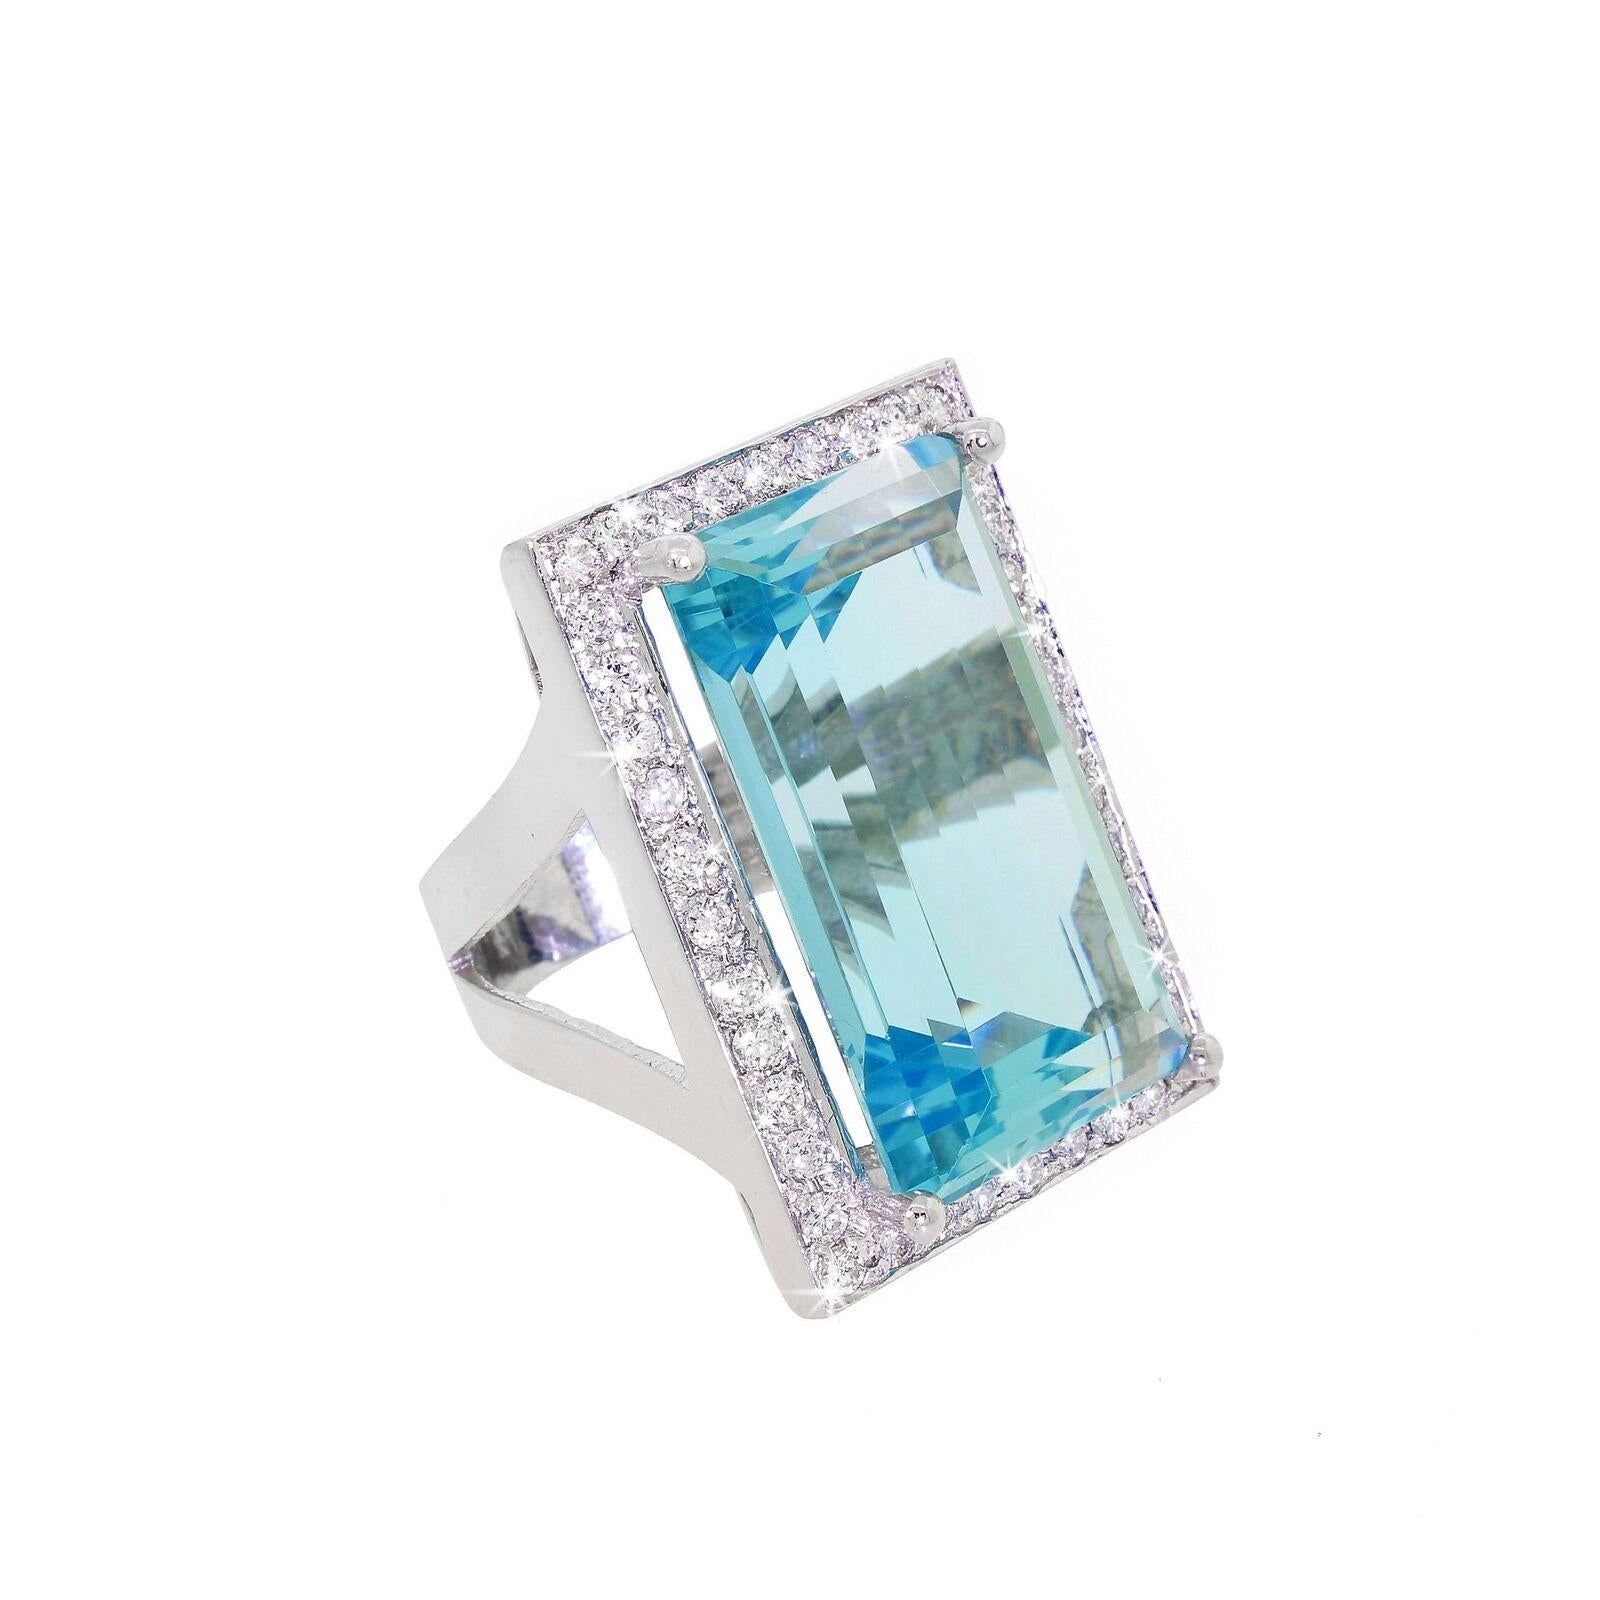 Exceptional 14 Karat 31ct Aquamarine 1.25 Carat Diamond Halo Ring with Appraisal 1